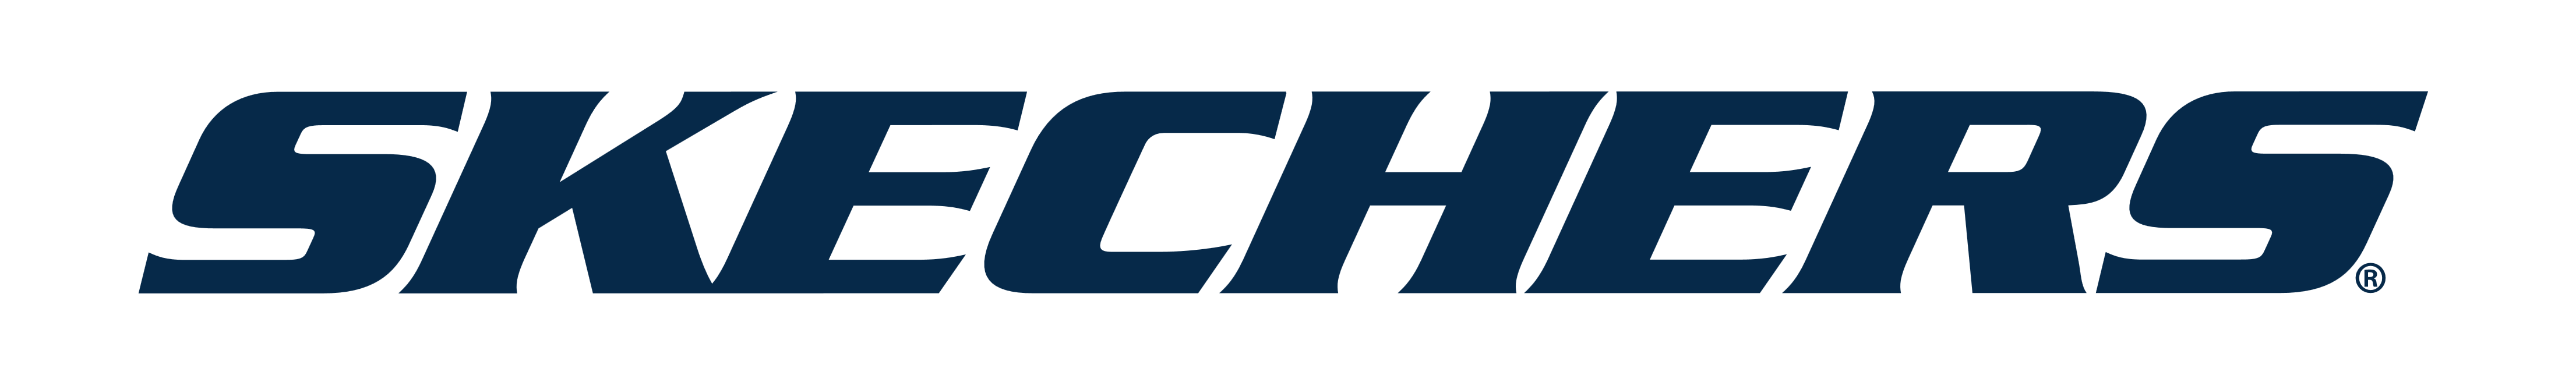 Company logo Skechers